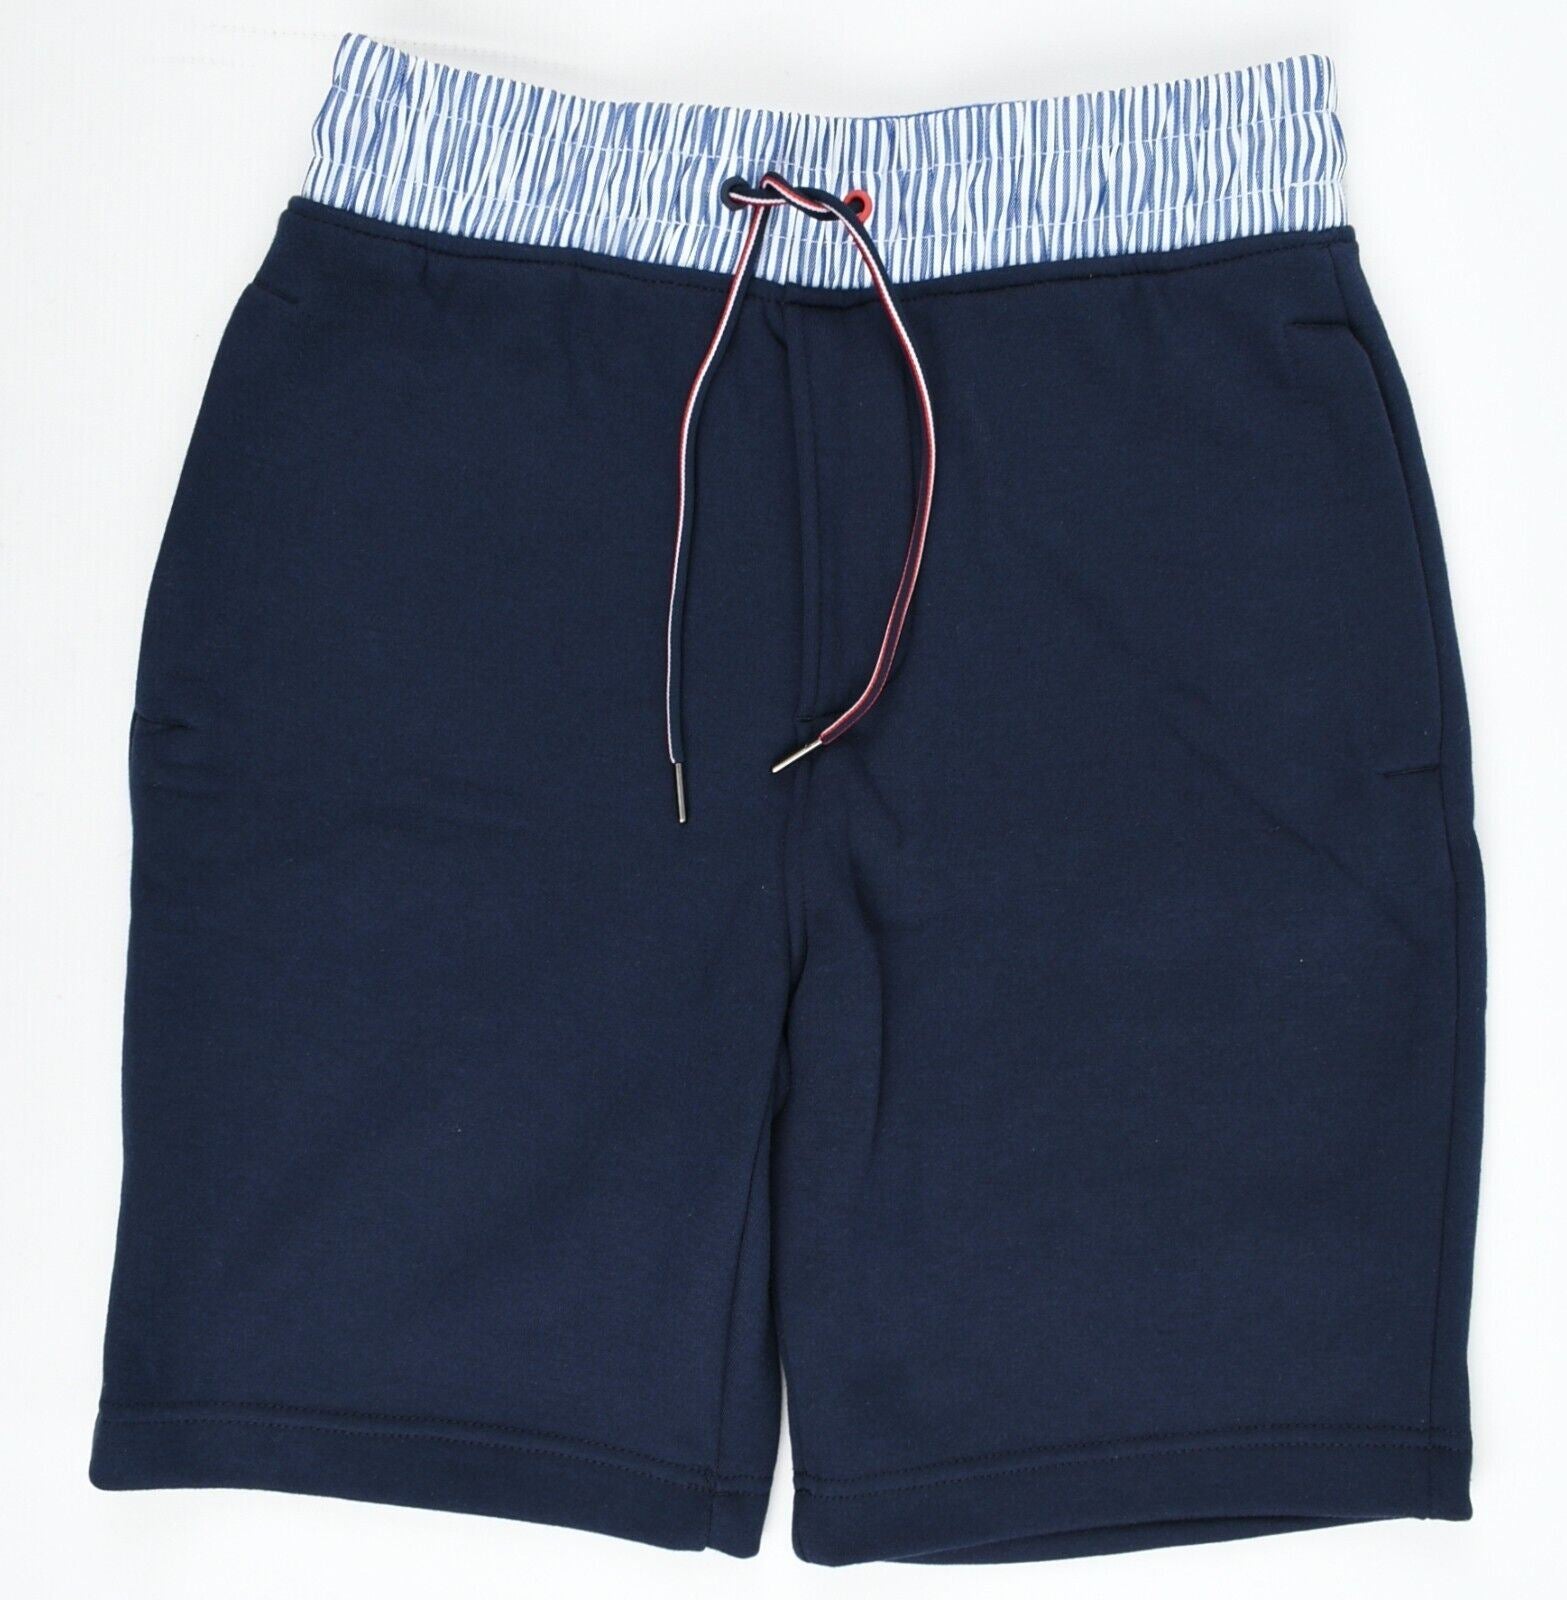 TOMMY HILFIGER Men's Sweat Shorts, Navy Blue, size XS